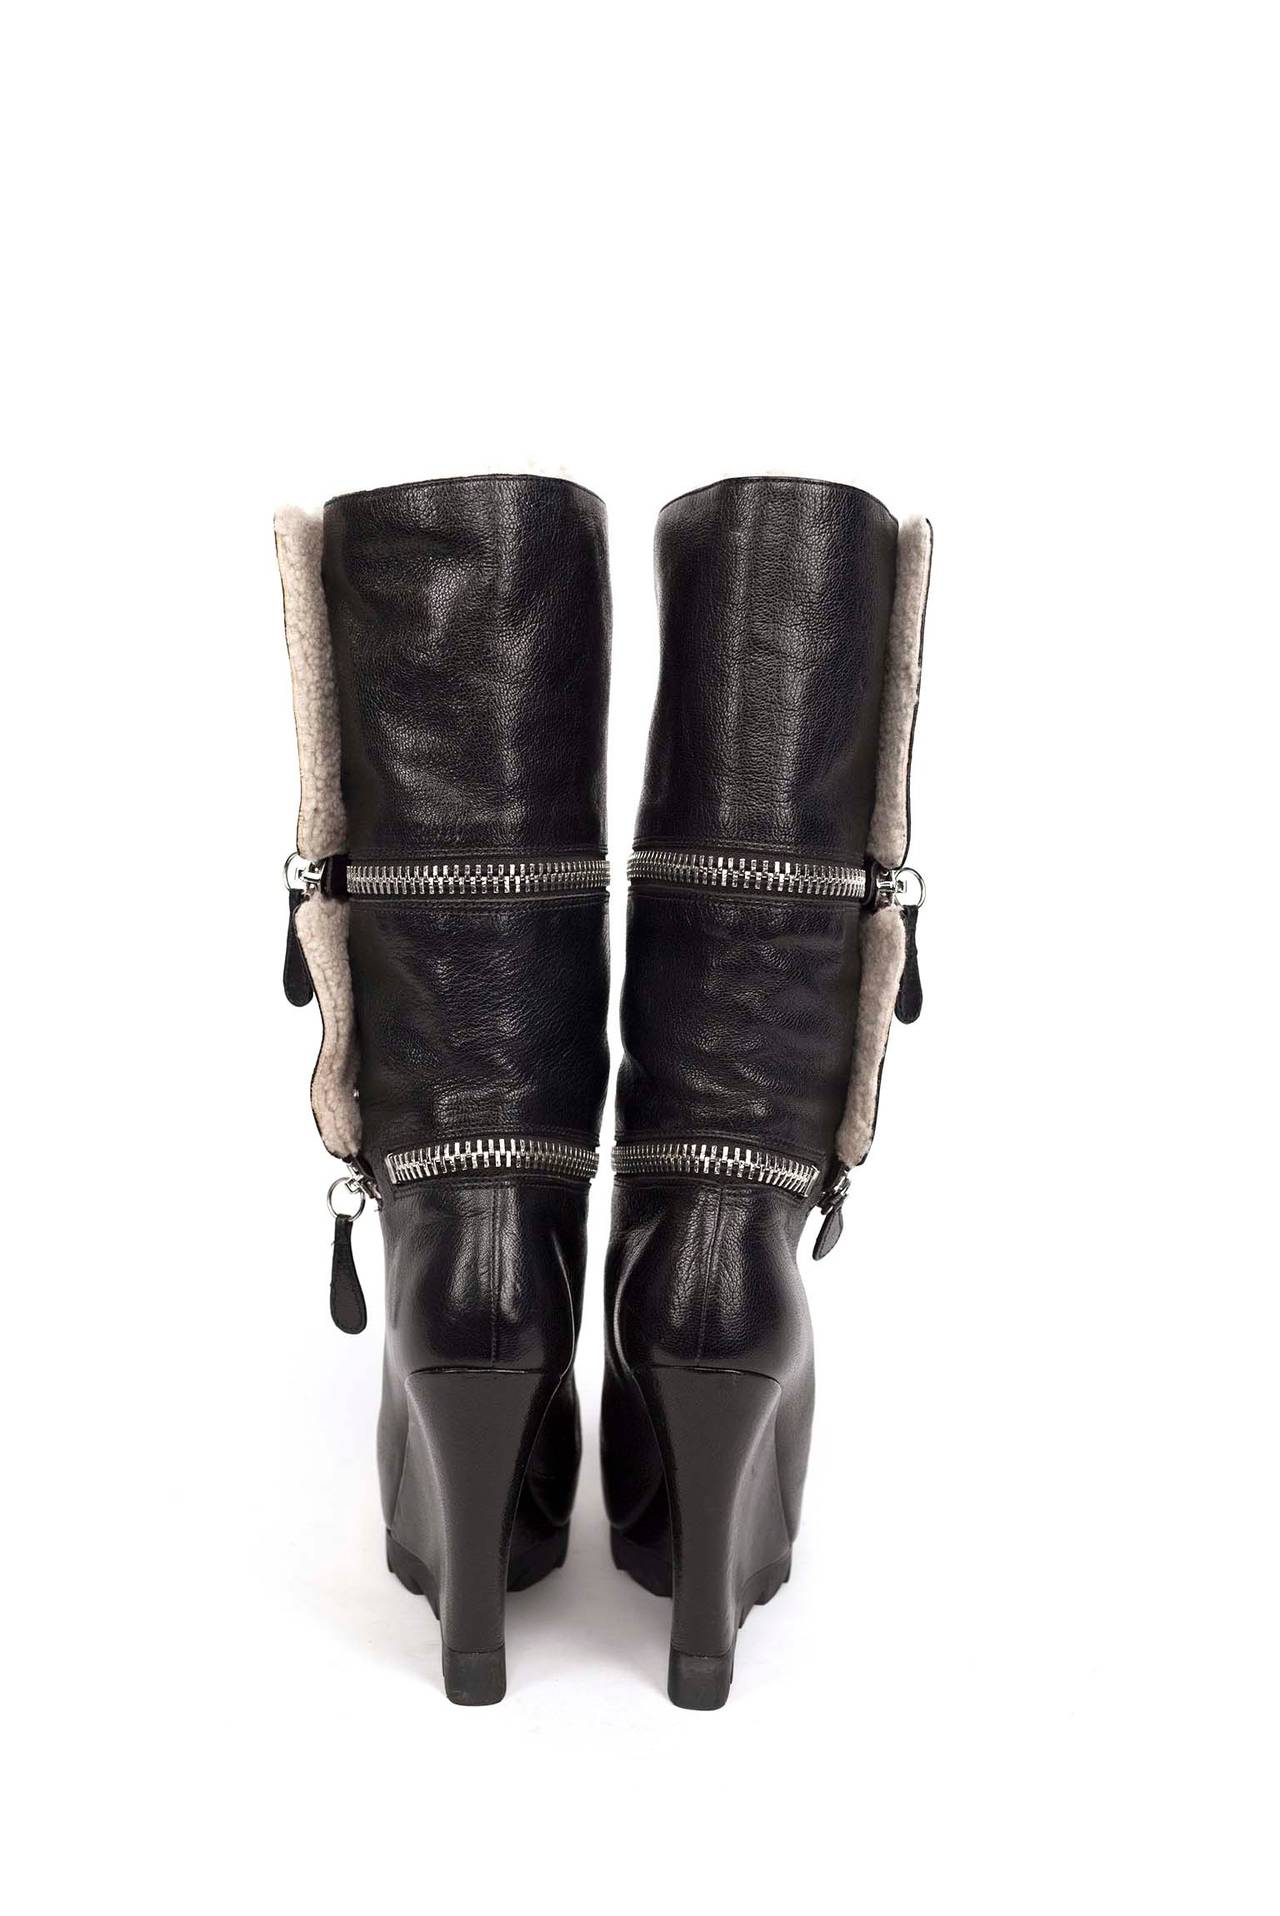 Camilla Skovgaard zippered leather ankle-high platform wedge boots 2